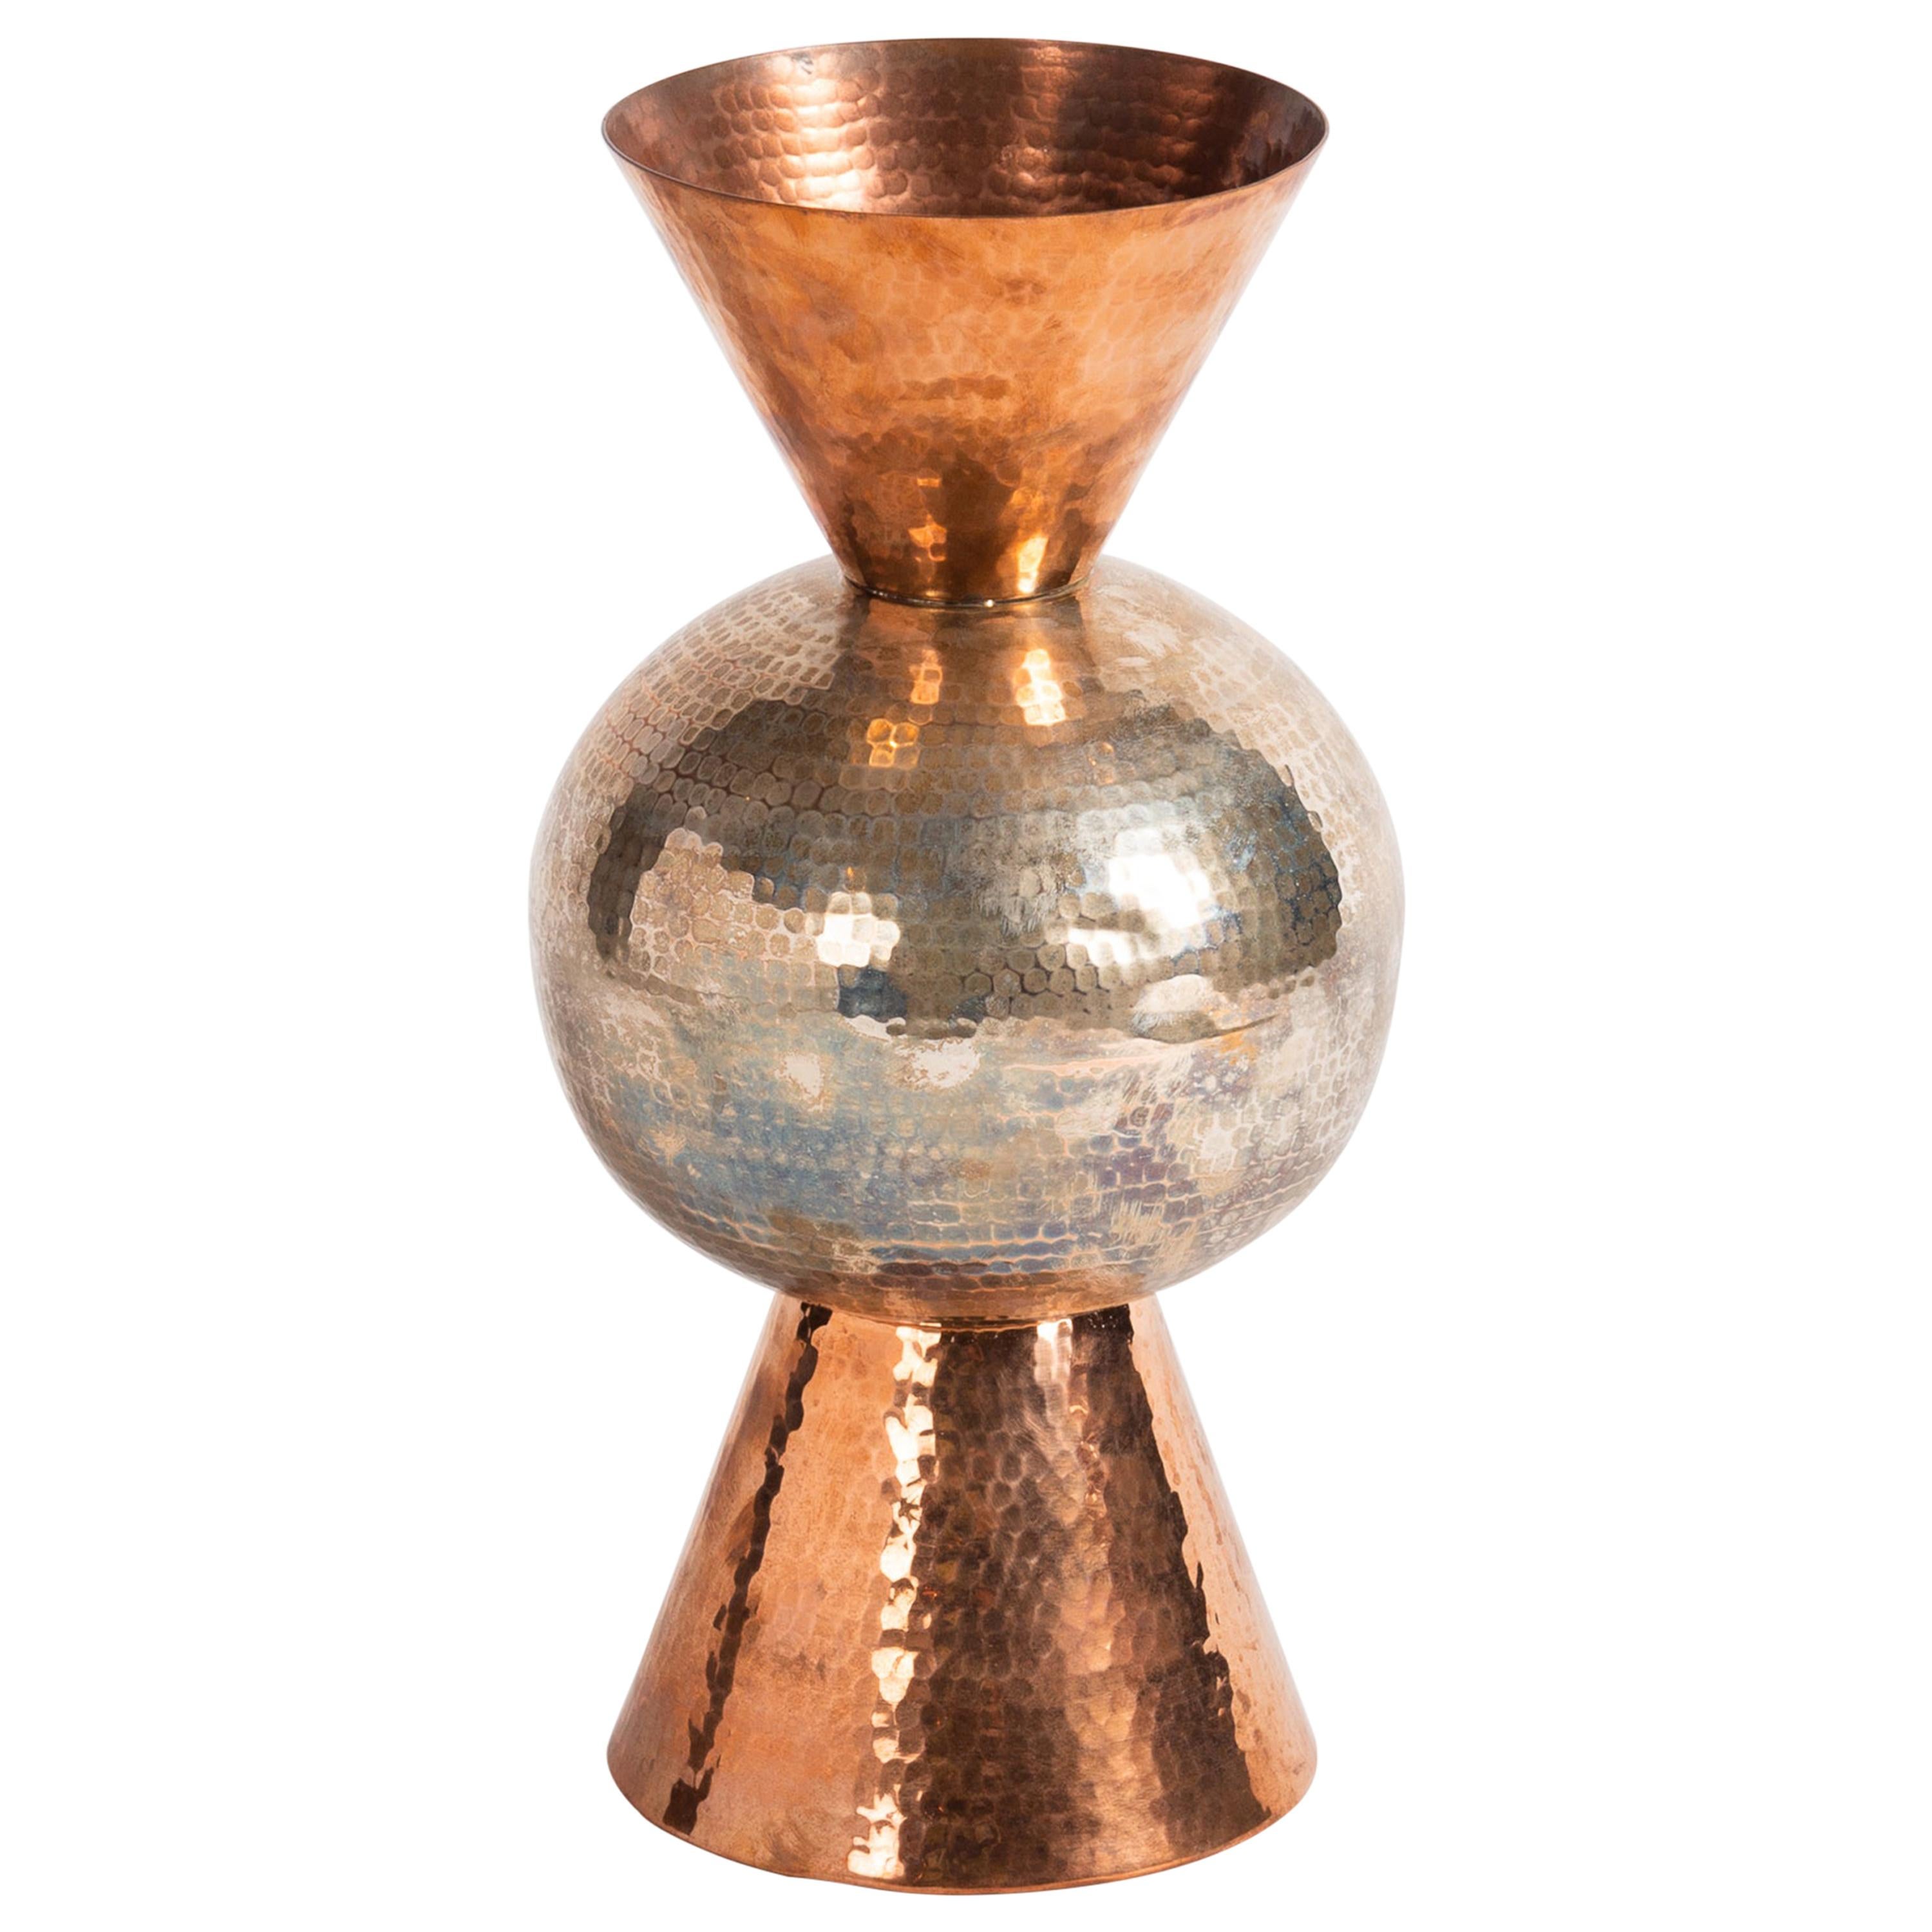 Laura Kirar, "Totem Jarron: Pequeño" Contemporary Copper Vessel, Mexico, 2018 For Sale